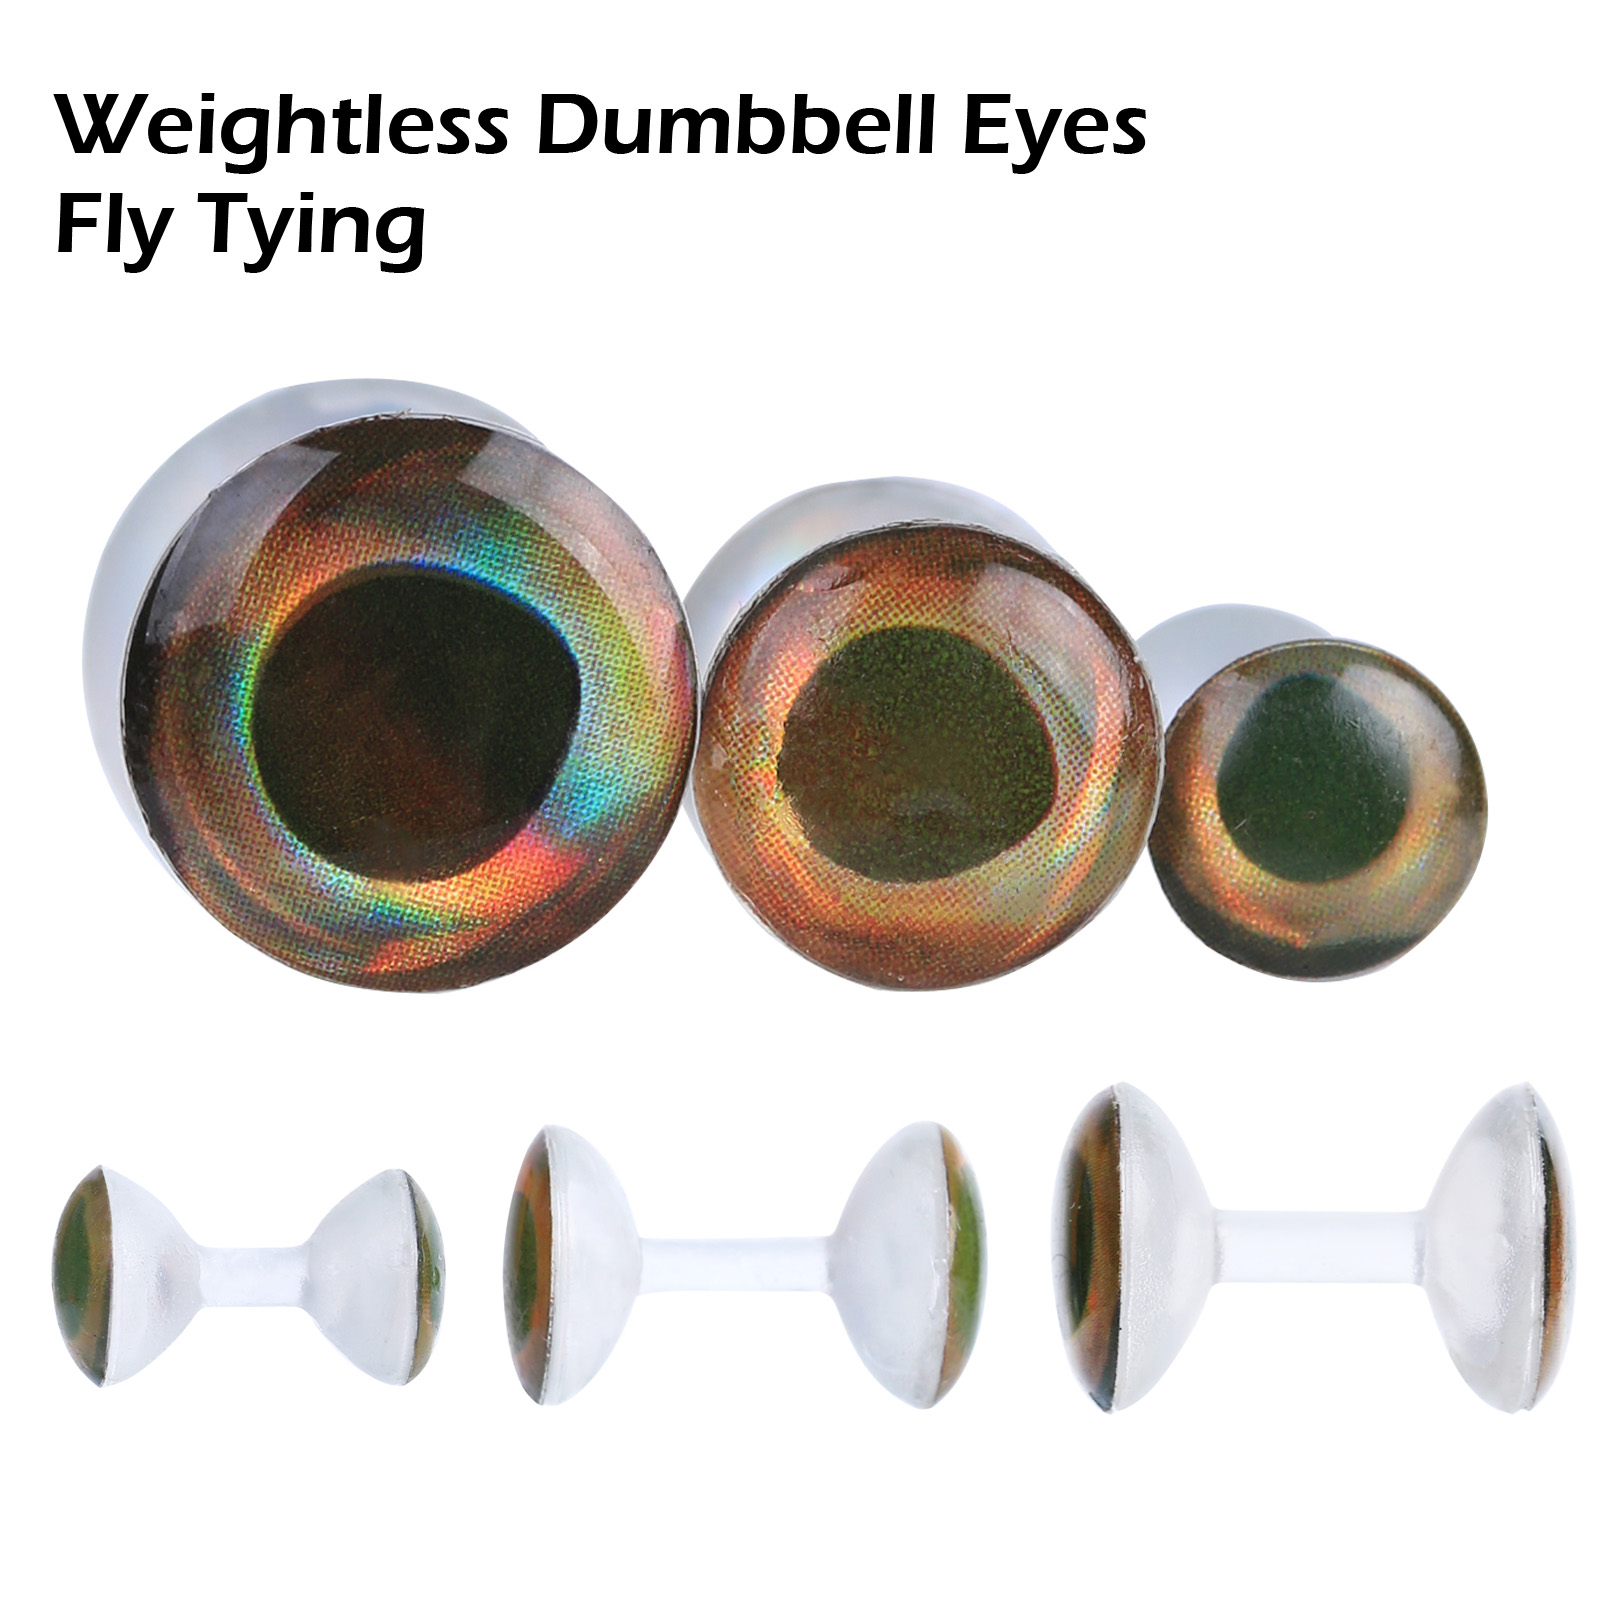 Weightless Dumbbell Eyes